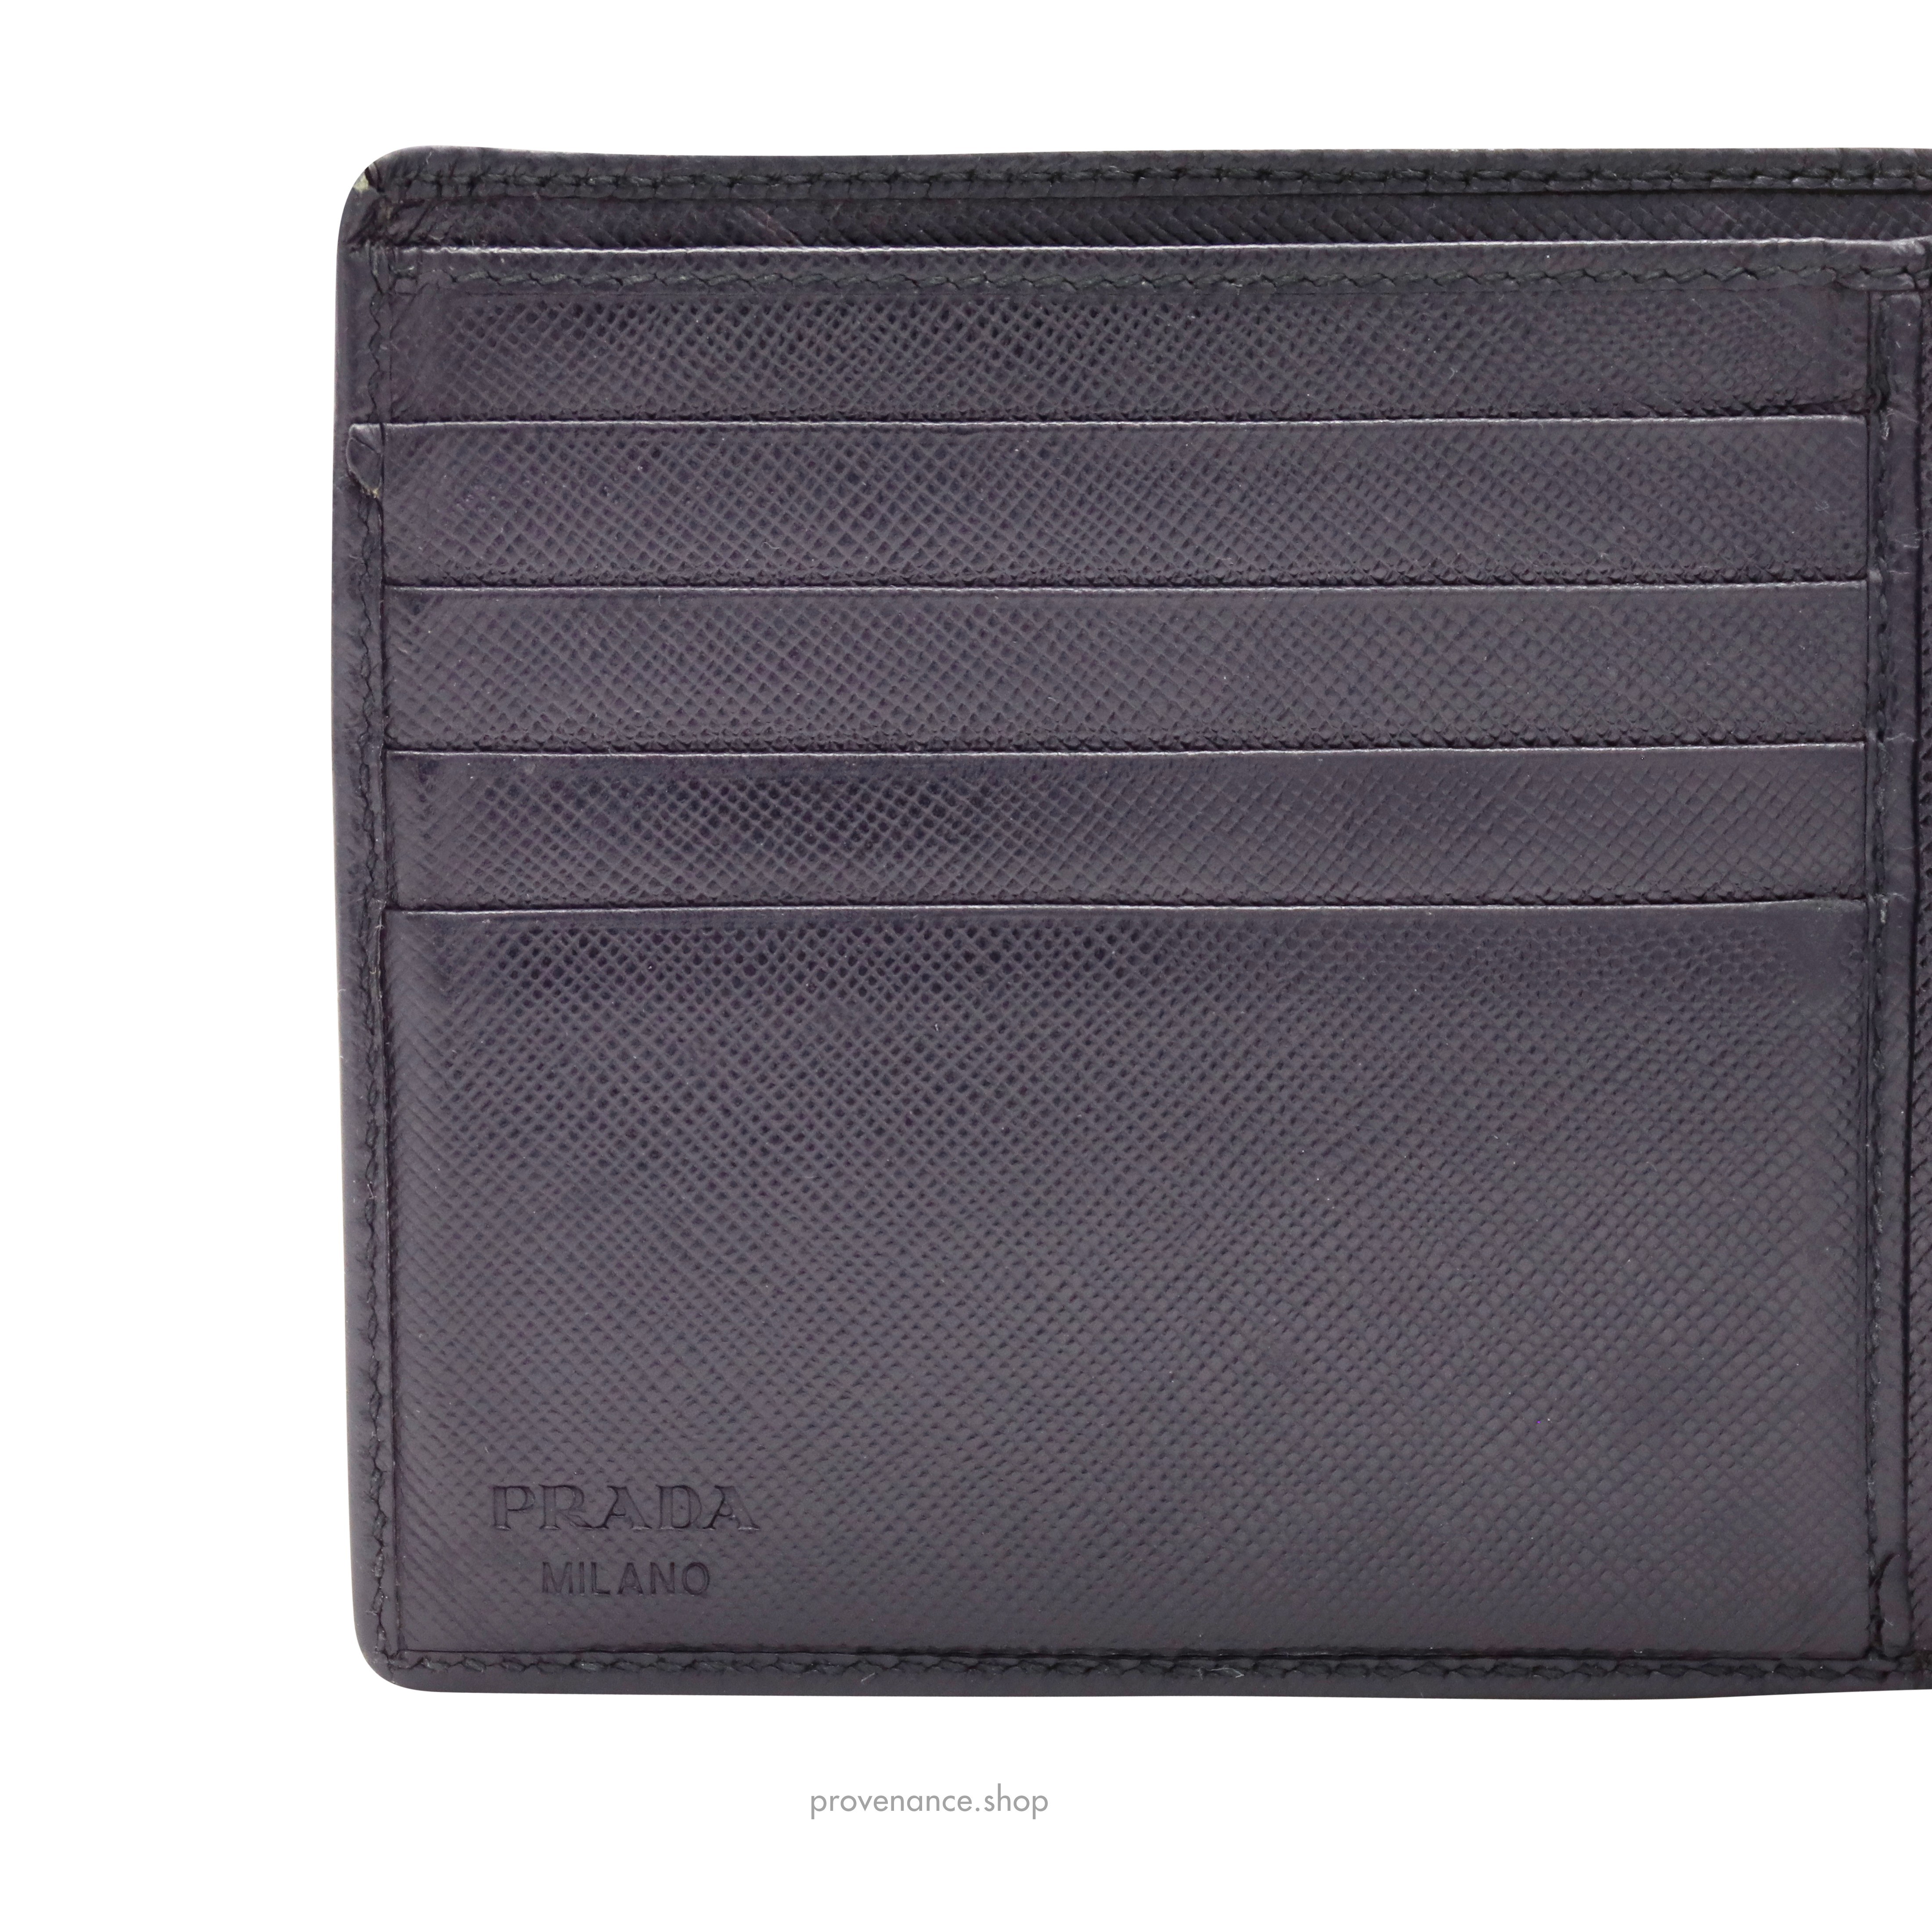 Prada Bifold Wallet - Nero Saffiano Leather - 7